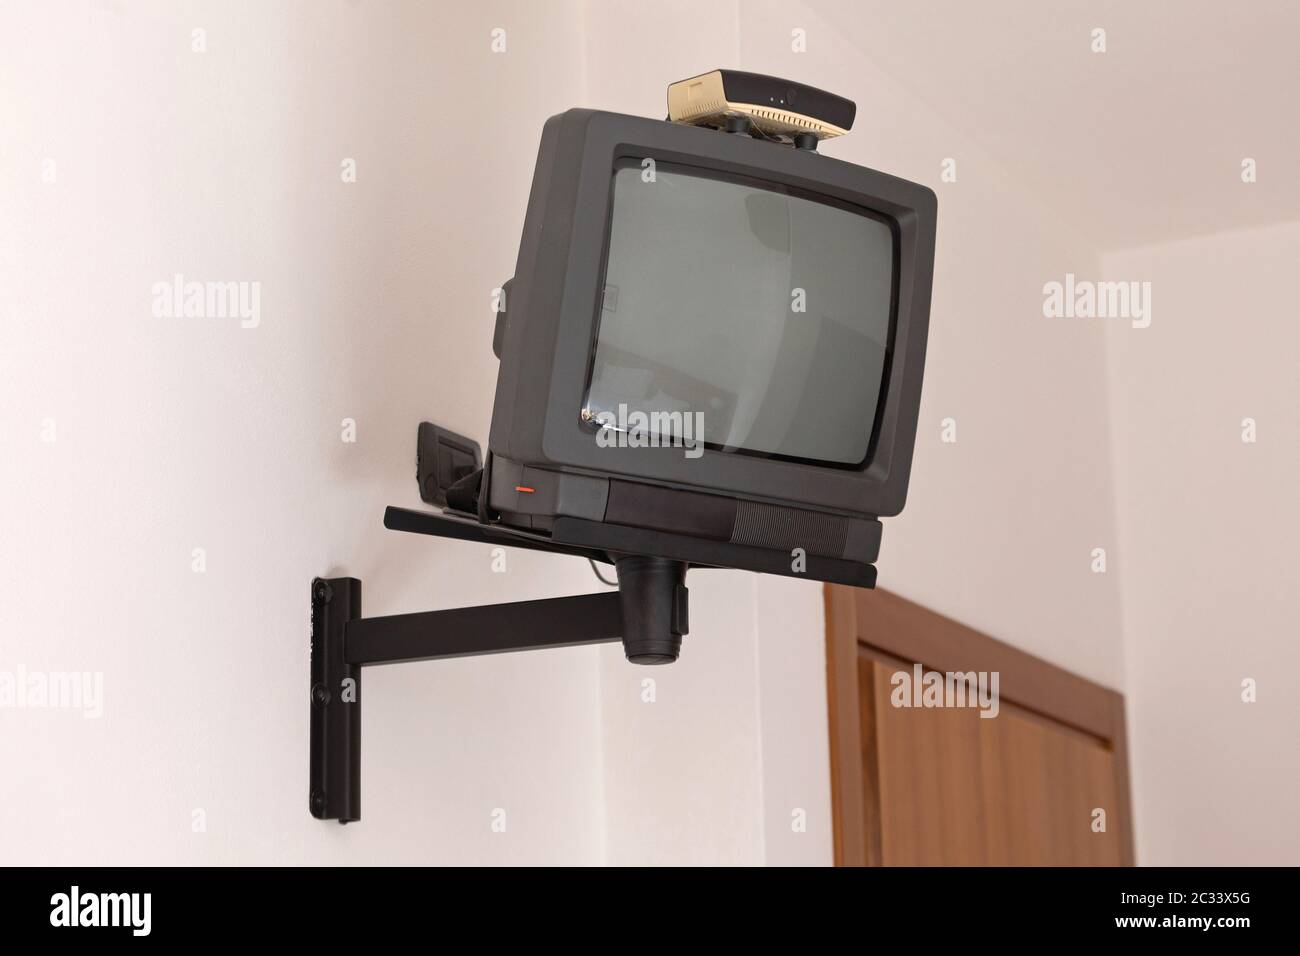 Tv television obsolete crt fotografías e imágenes de alta resolución - Alamy